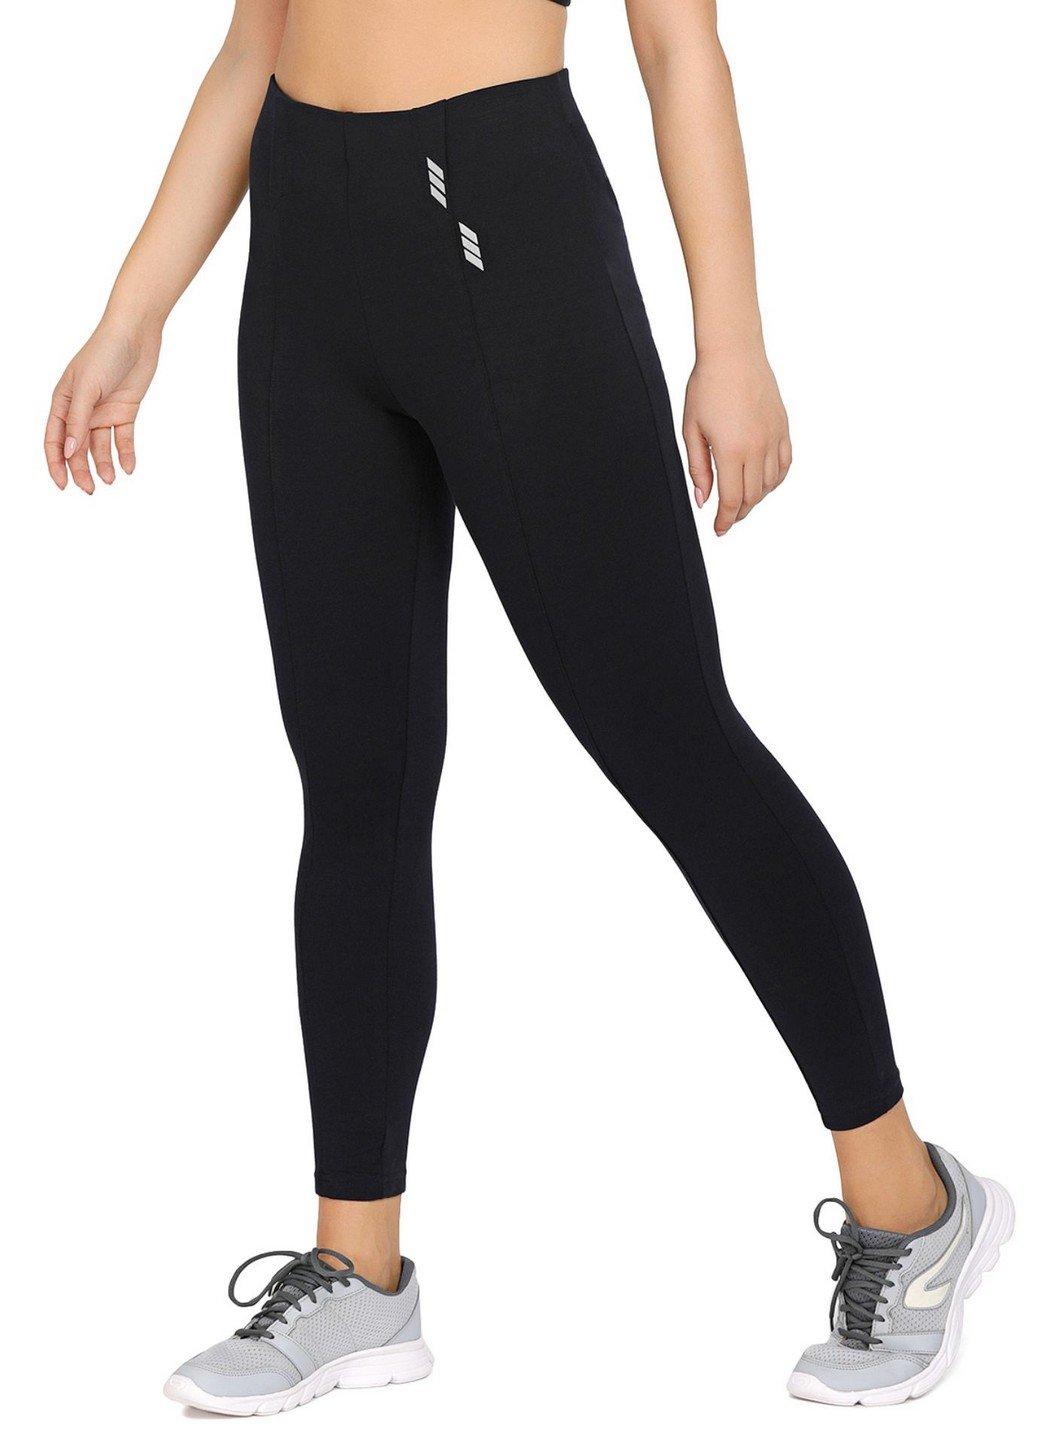 Lovable Black Cotton Ankle Length Tights Yoga Pants - Stilento